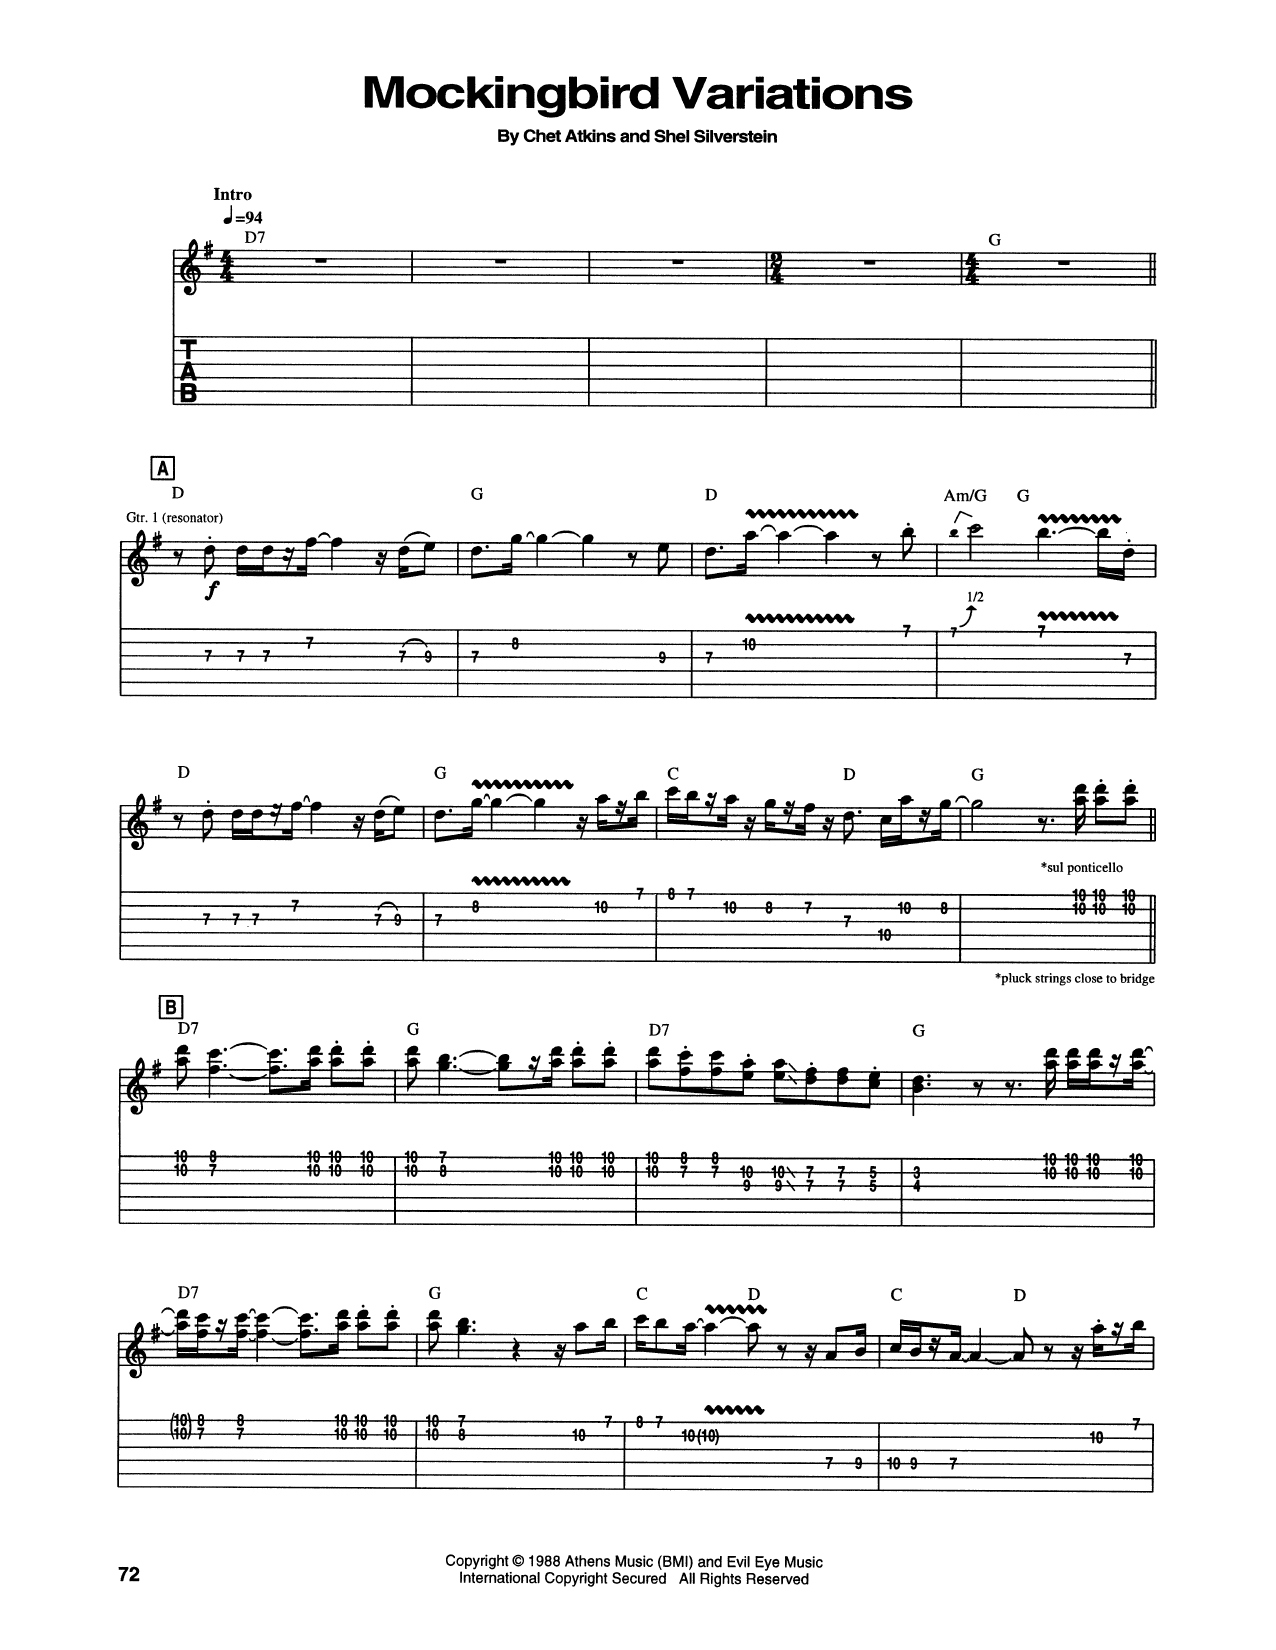 Chet Atkins Mockingbird Variations Sheet Music Notes & Chords for Guitar Tab - Download or Print PDF